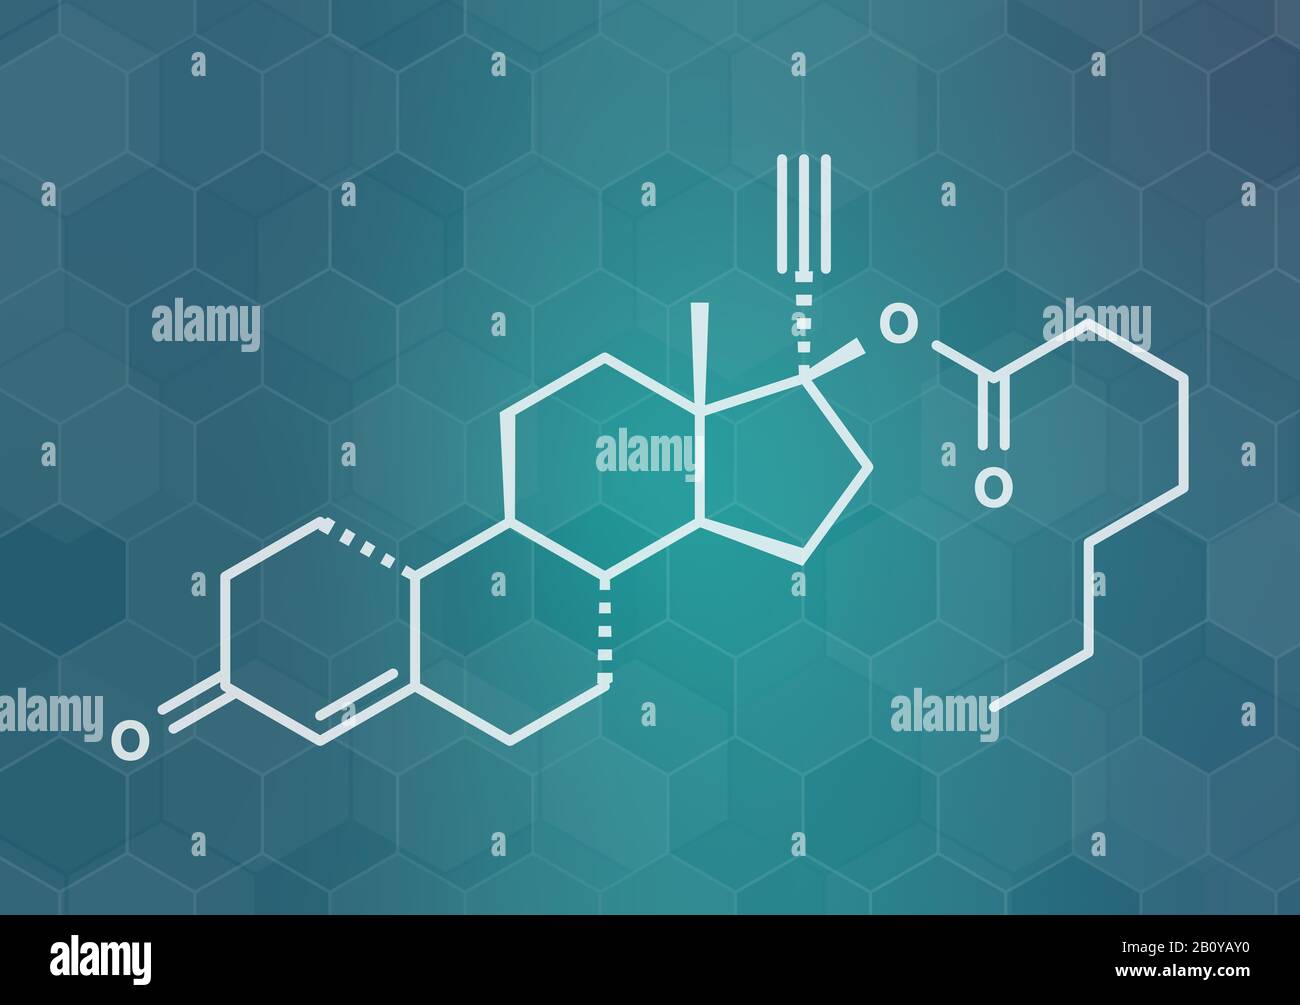 Norethisterone enanthate drug molecule, illustration Stock Photo